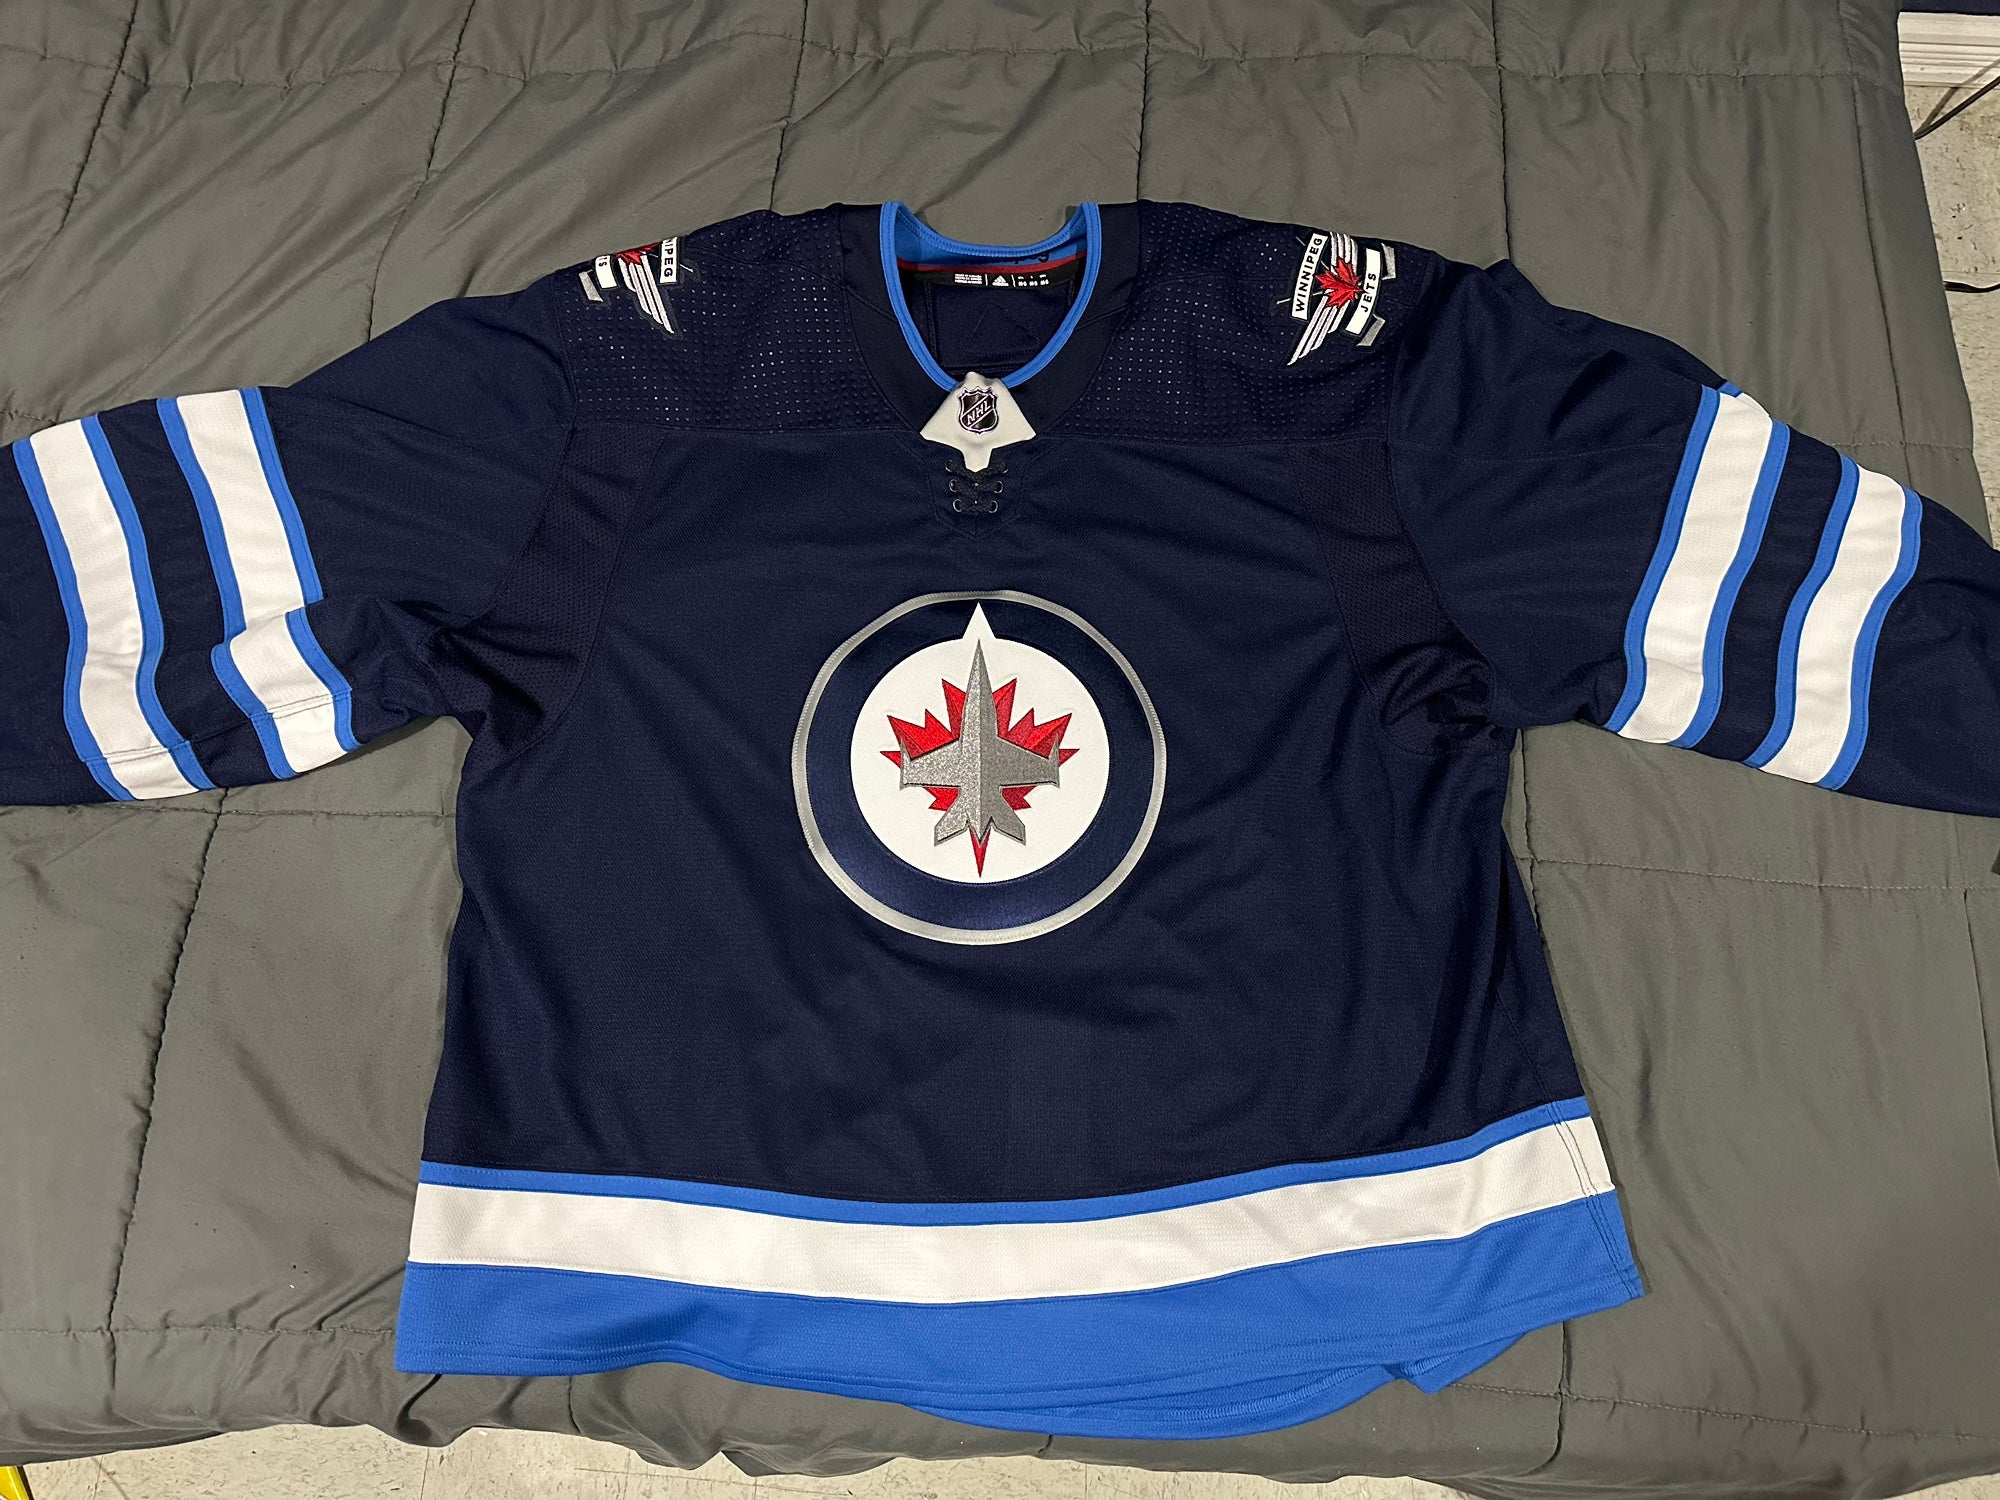 Winnipeg Jets home jersey